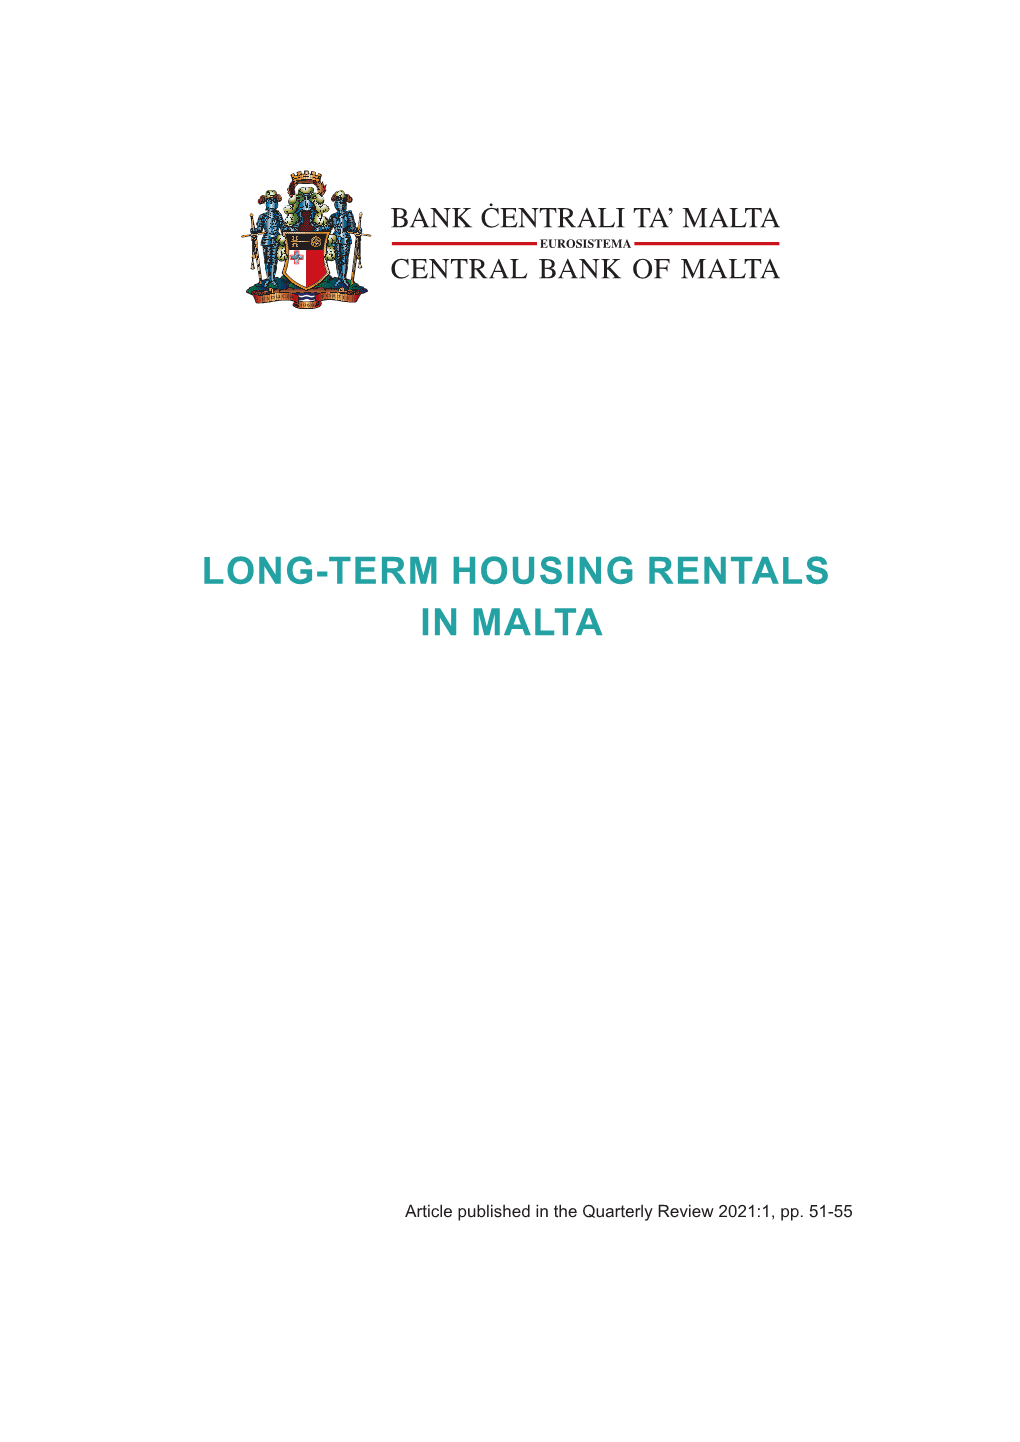 Long-Term Housing Rentals in Malta